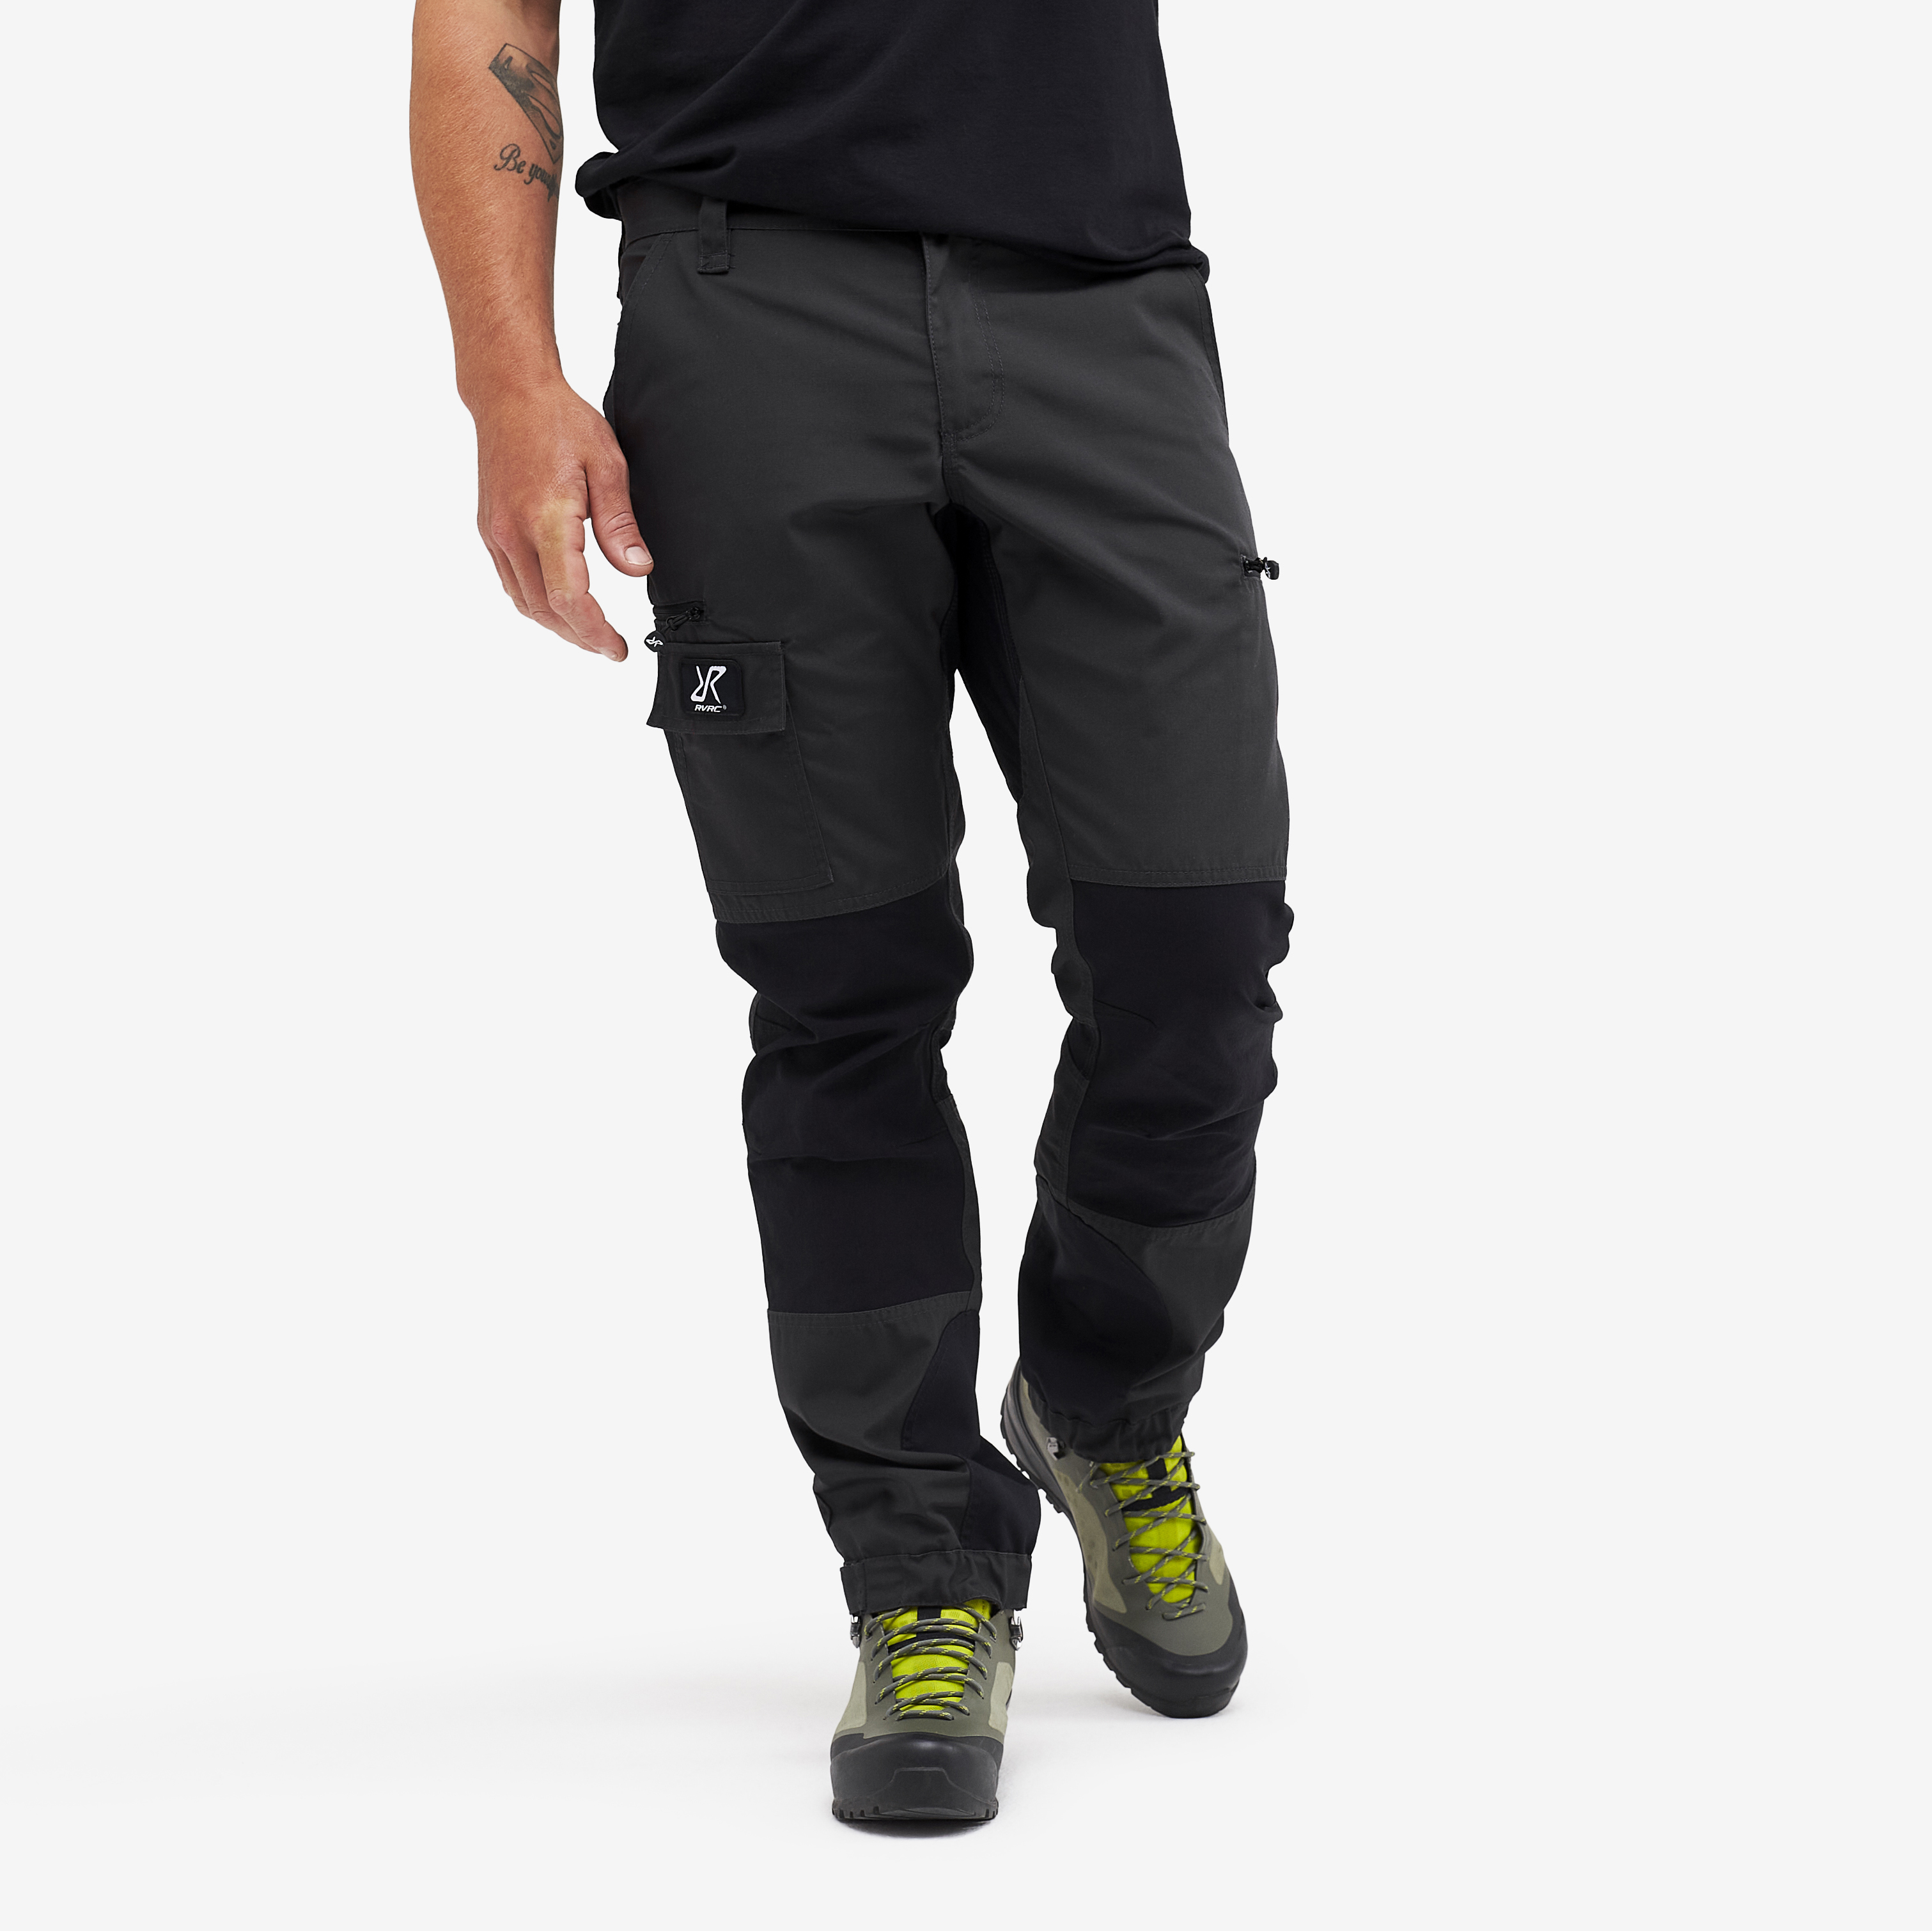 Nordwand Short walking trousers for men in dark grey